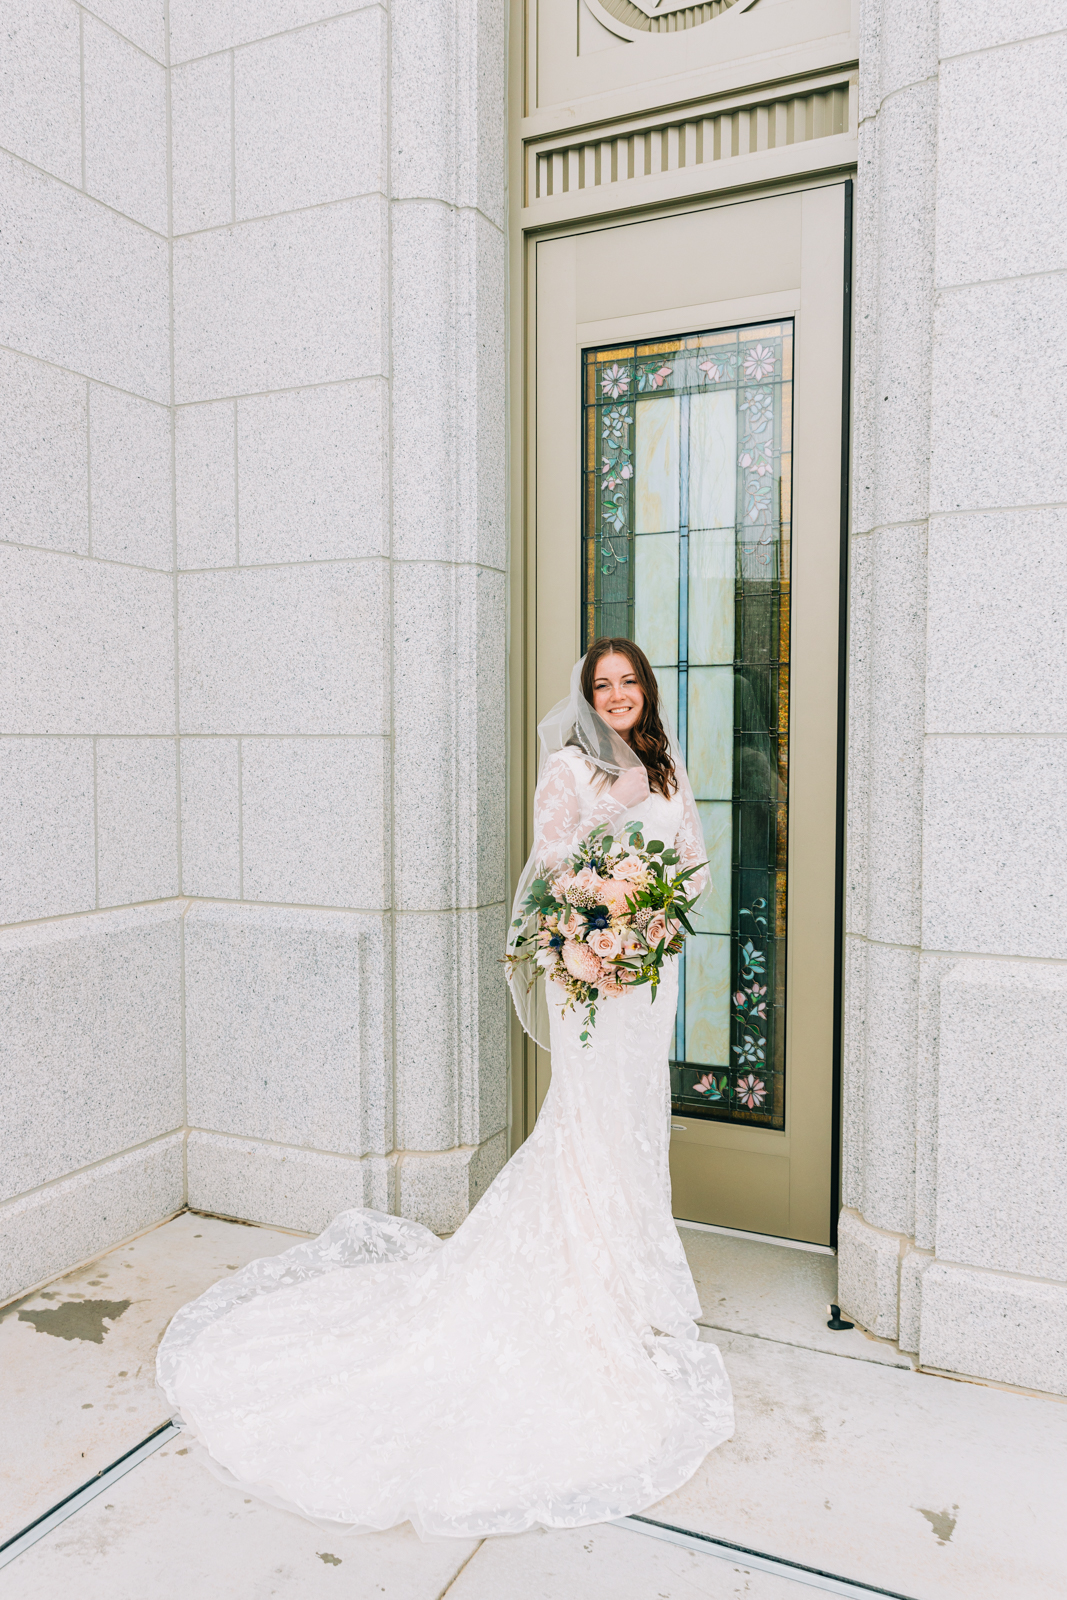 Jackson Hole wedding photographer captures beautiful bride pocatello temple